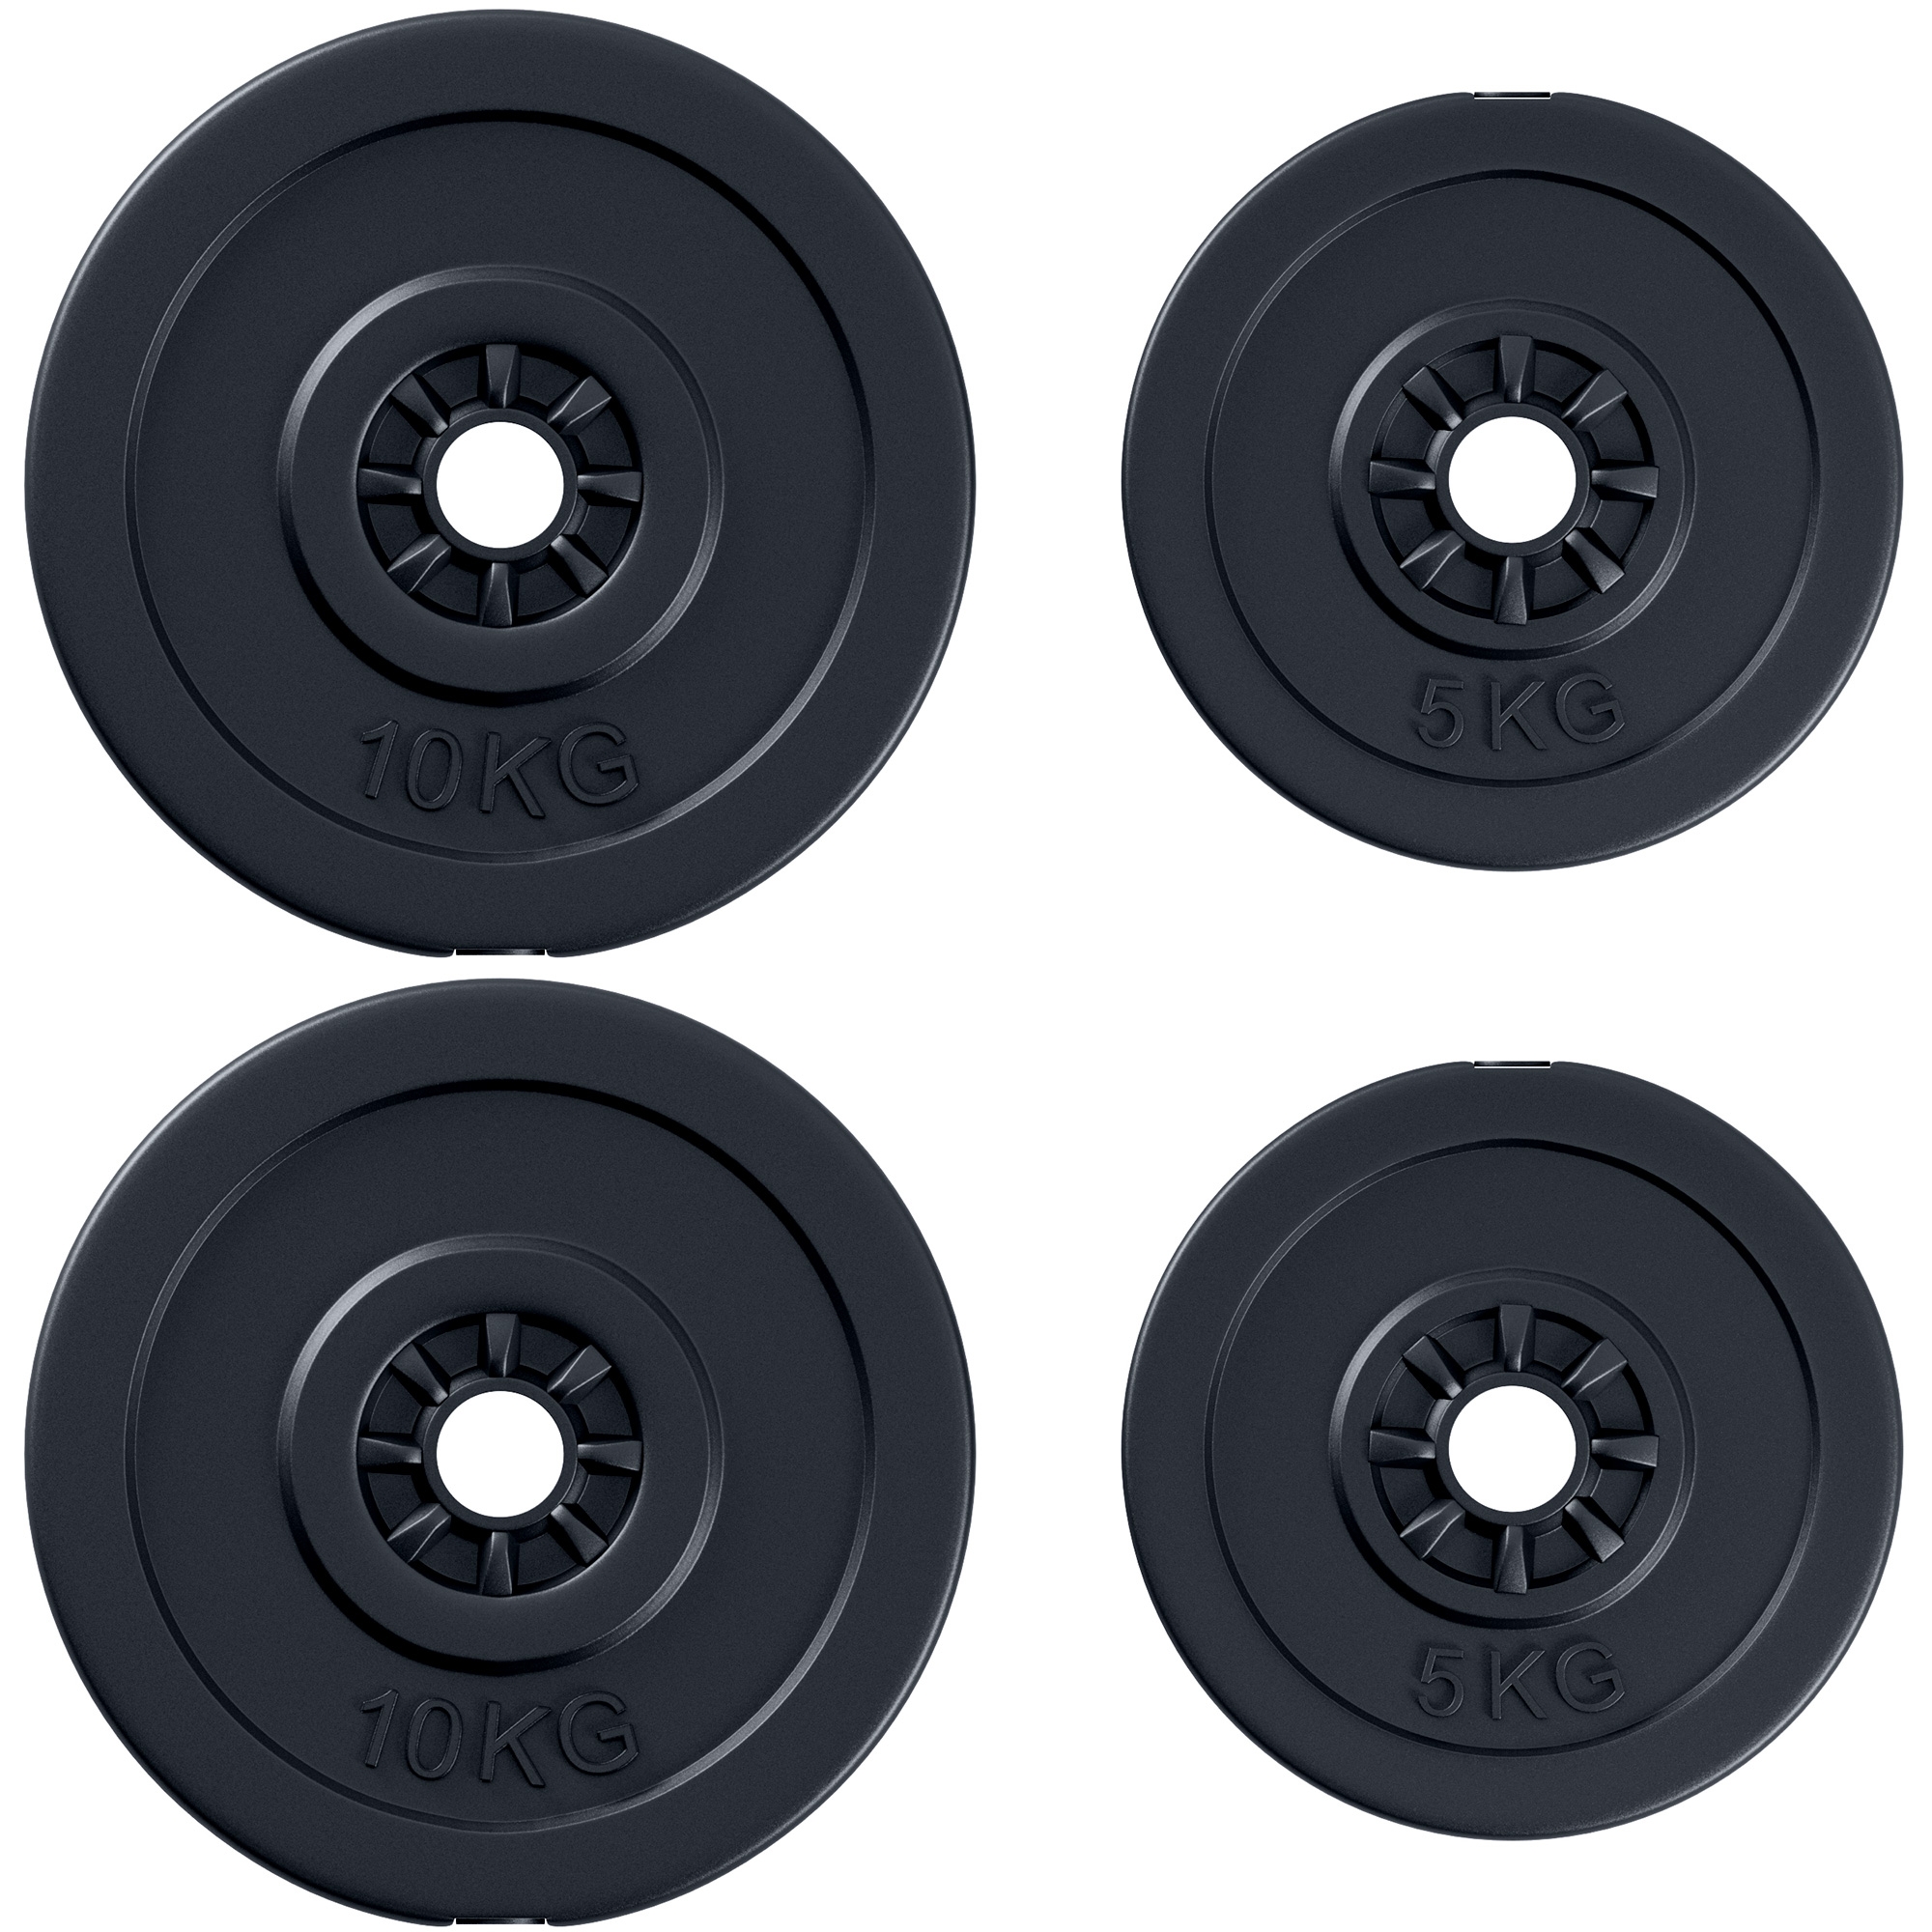 homcom set di 4 dischi pesi per bilanciere e manubri peso totale 30kg, 2x5kg e 2x10kg, nero uomo